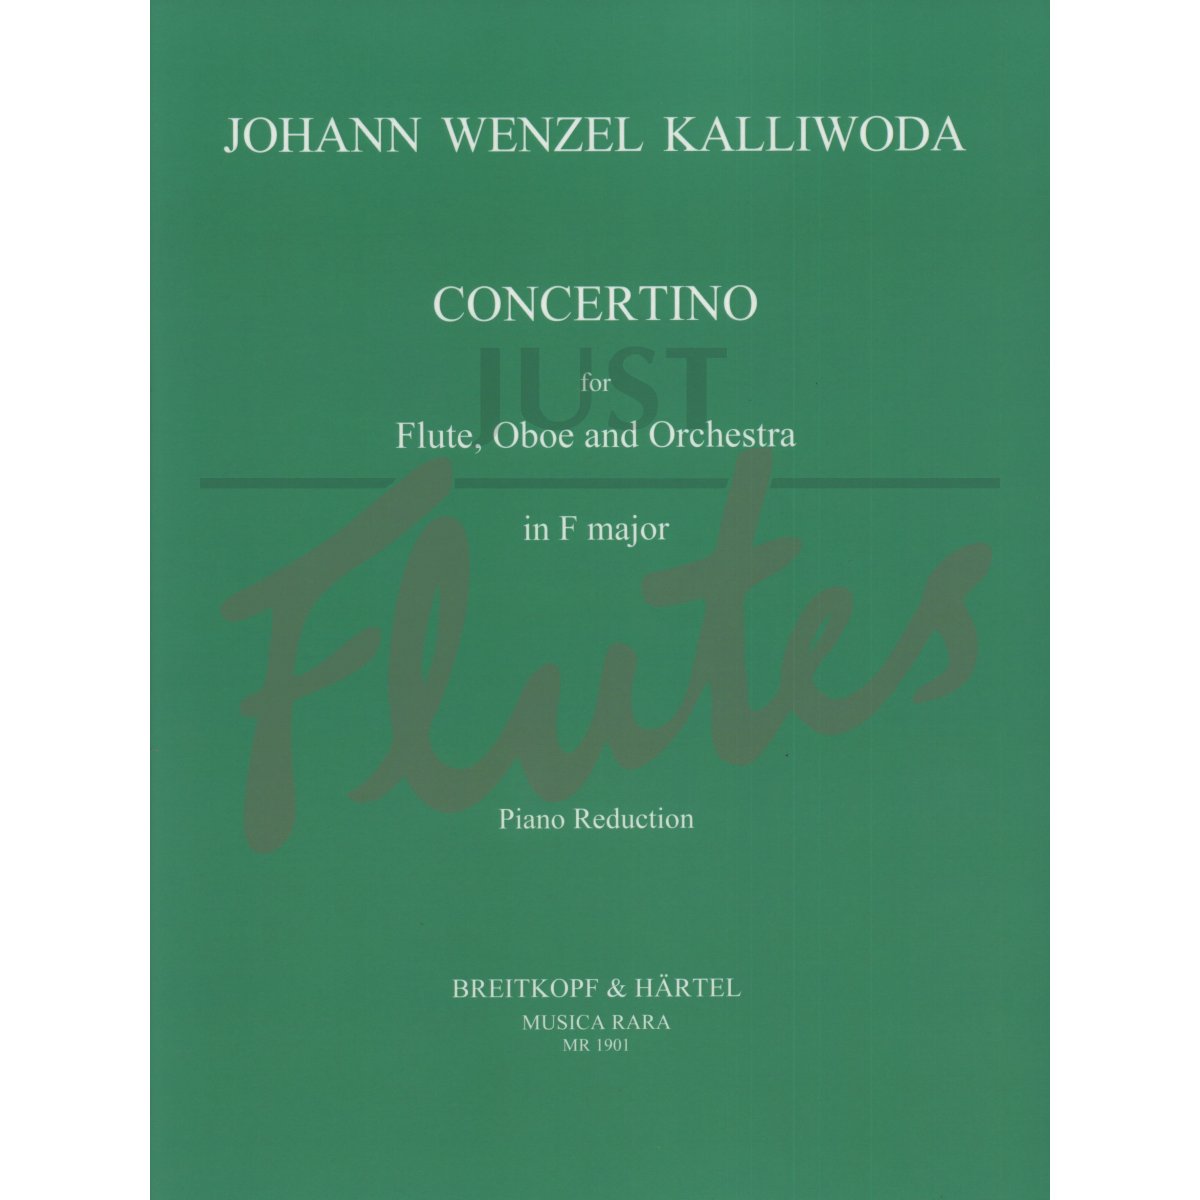 Concertino in F major for Flute, Oboe and Piano